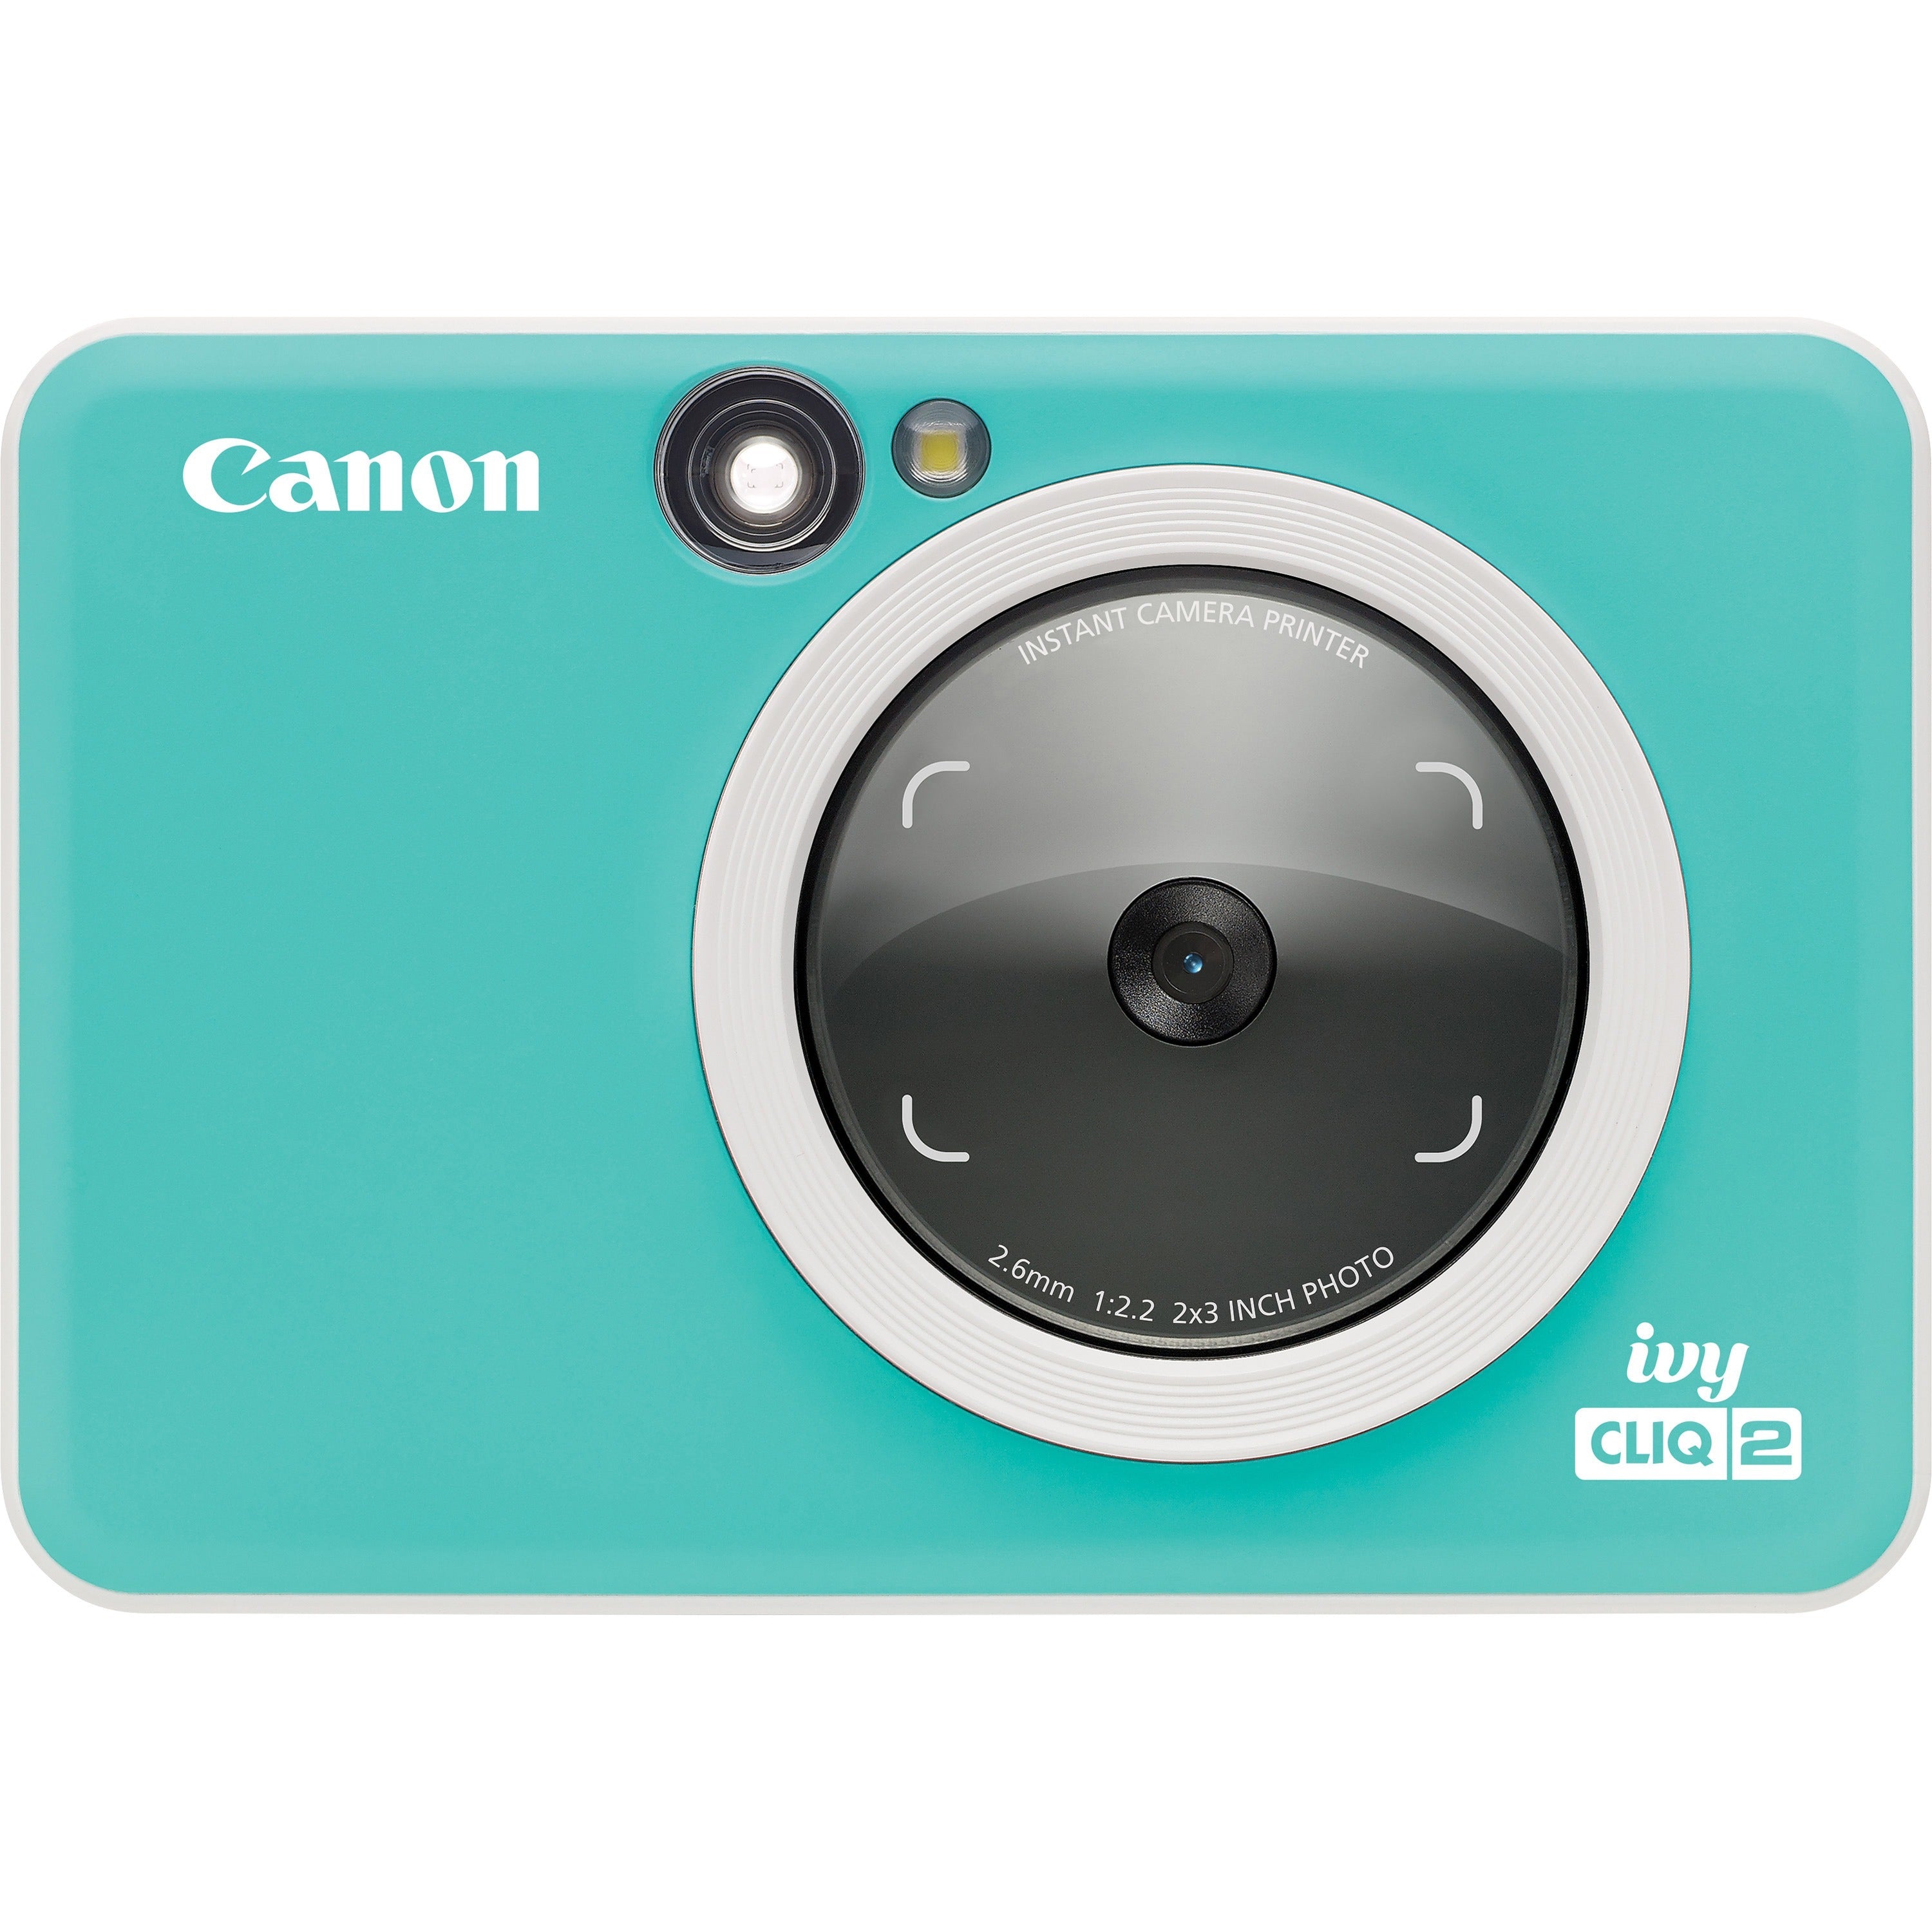 canon-ivy-cliq2-5-megapixel-instant-digital-camera-turquoise-autofocus_cnmivycliq2turq - 1